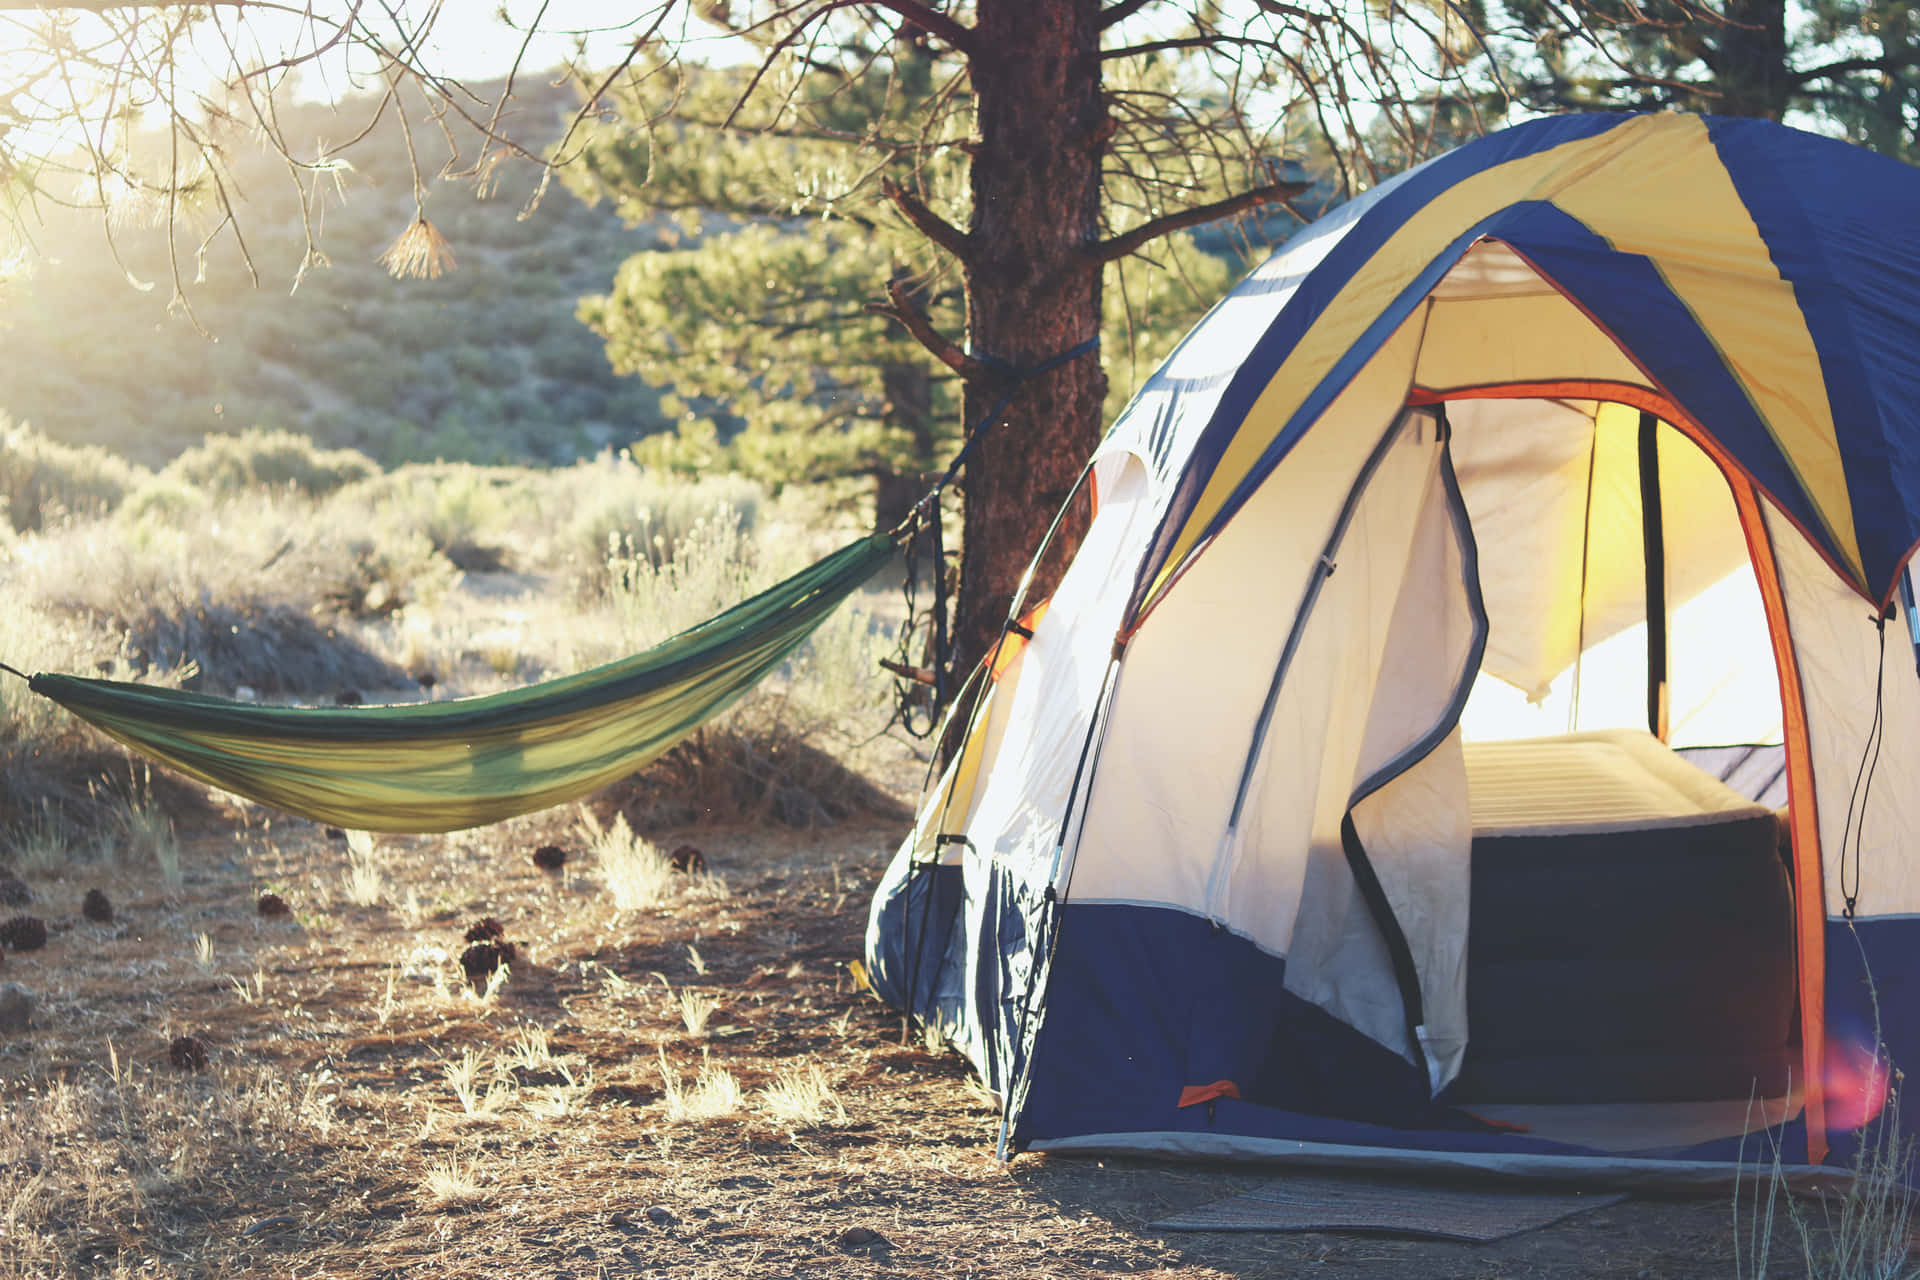 Enfredfyldt, Rustik Campingplads Midt I Naturen.